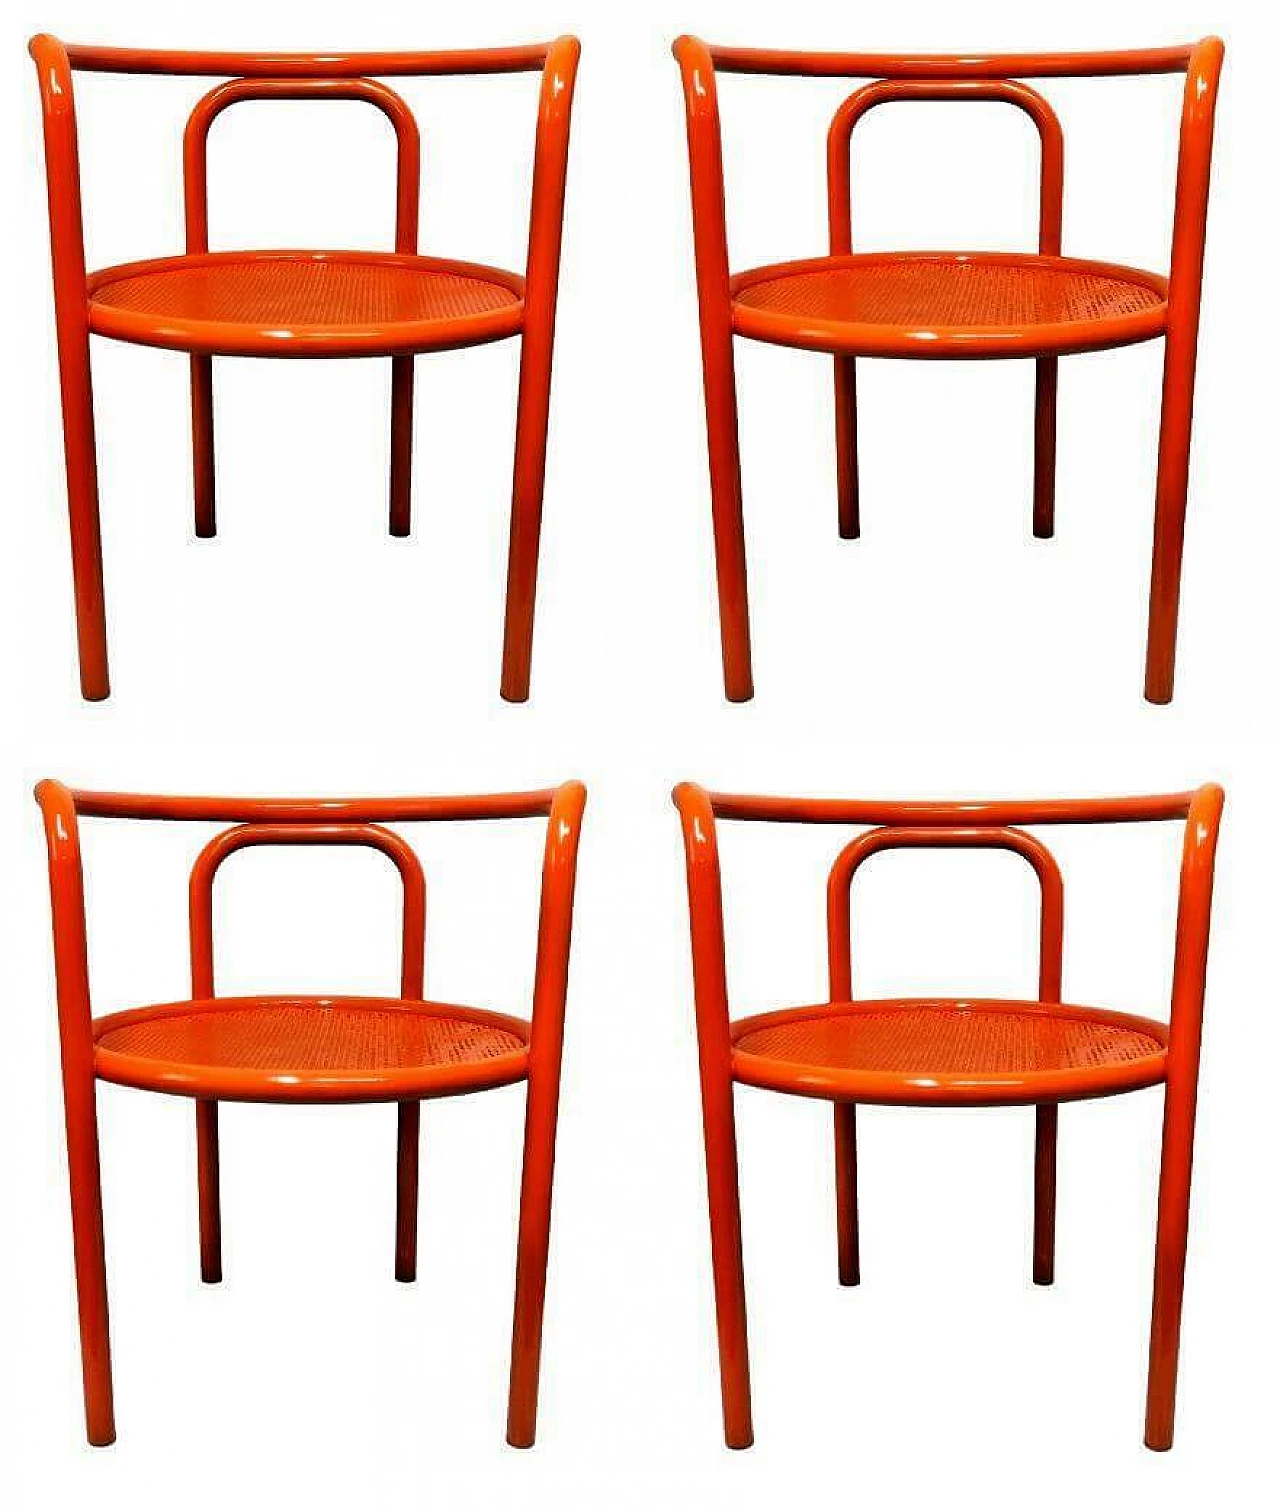 4 Chairs orange Solus Locus  by Gae Aulenti for Poltronova, 1960s 1165909